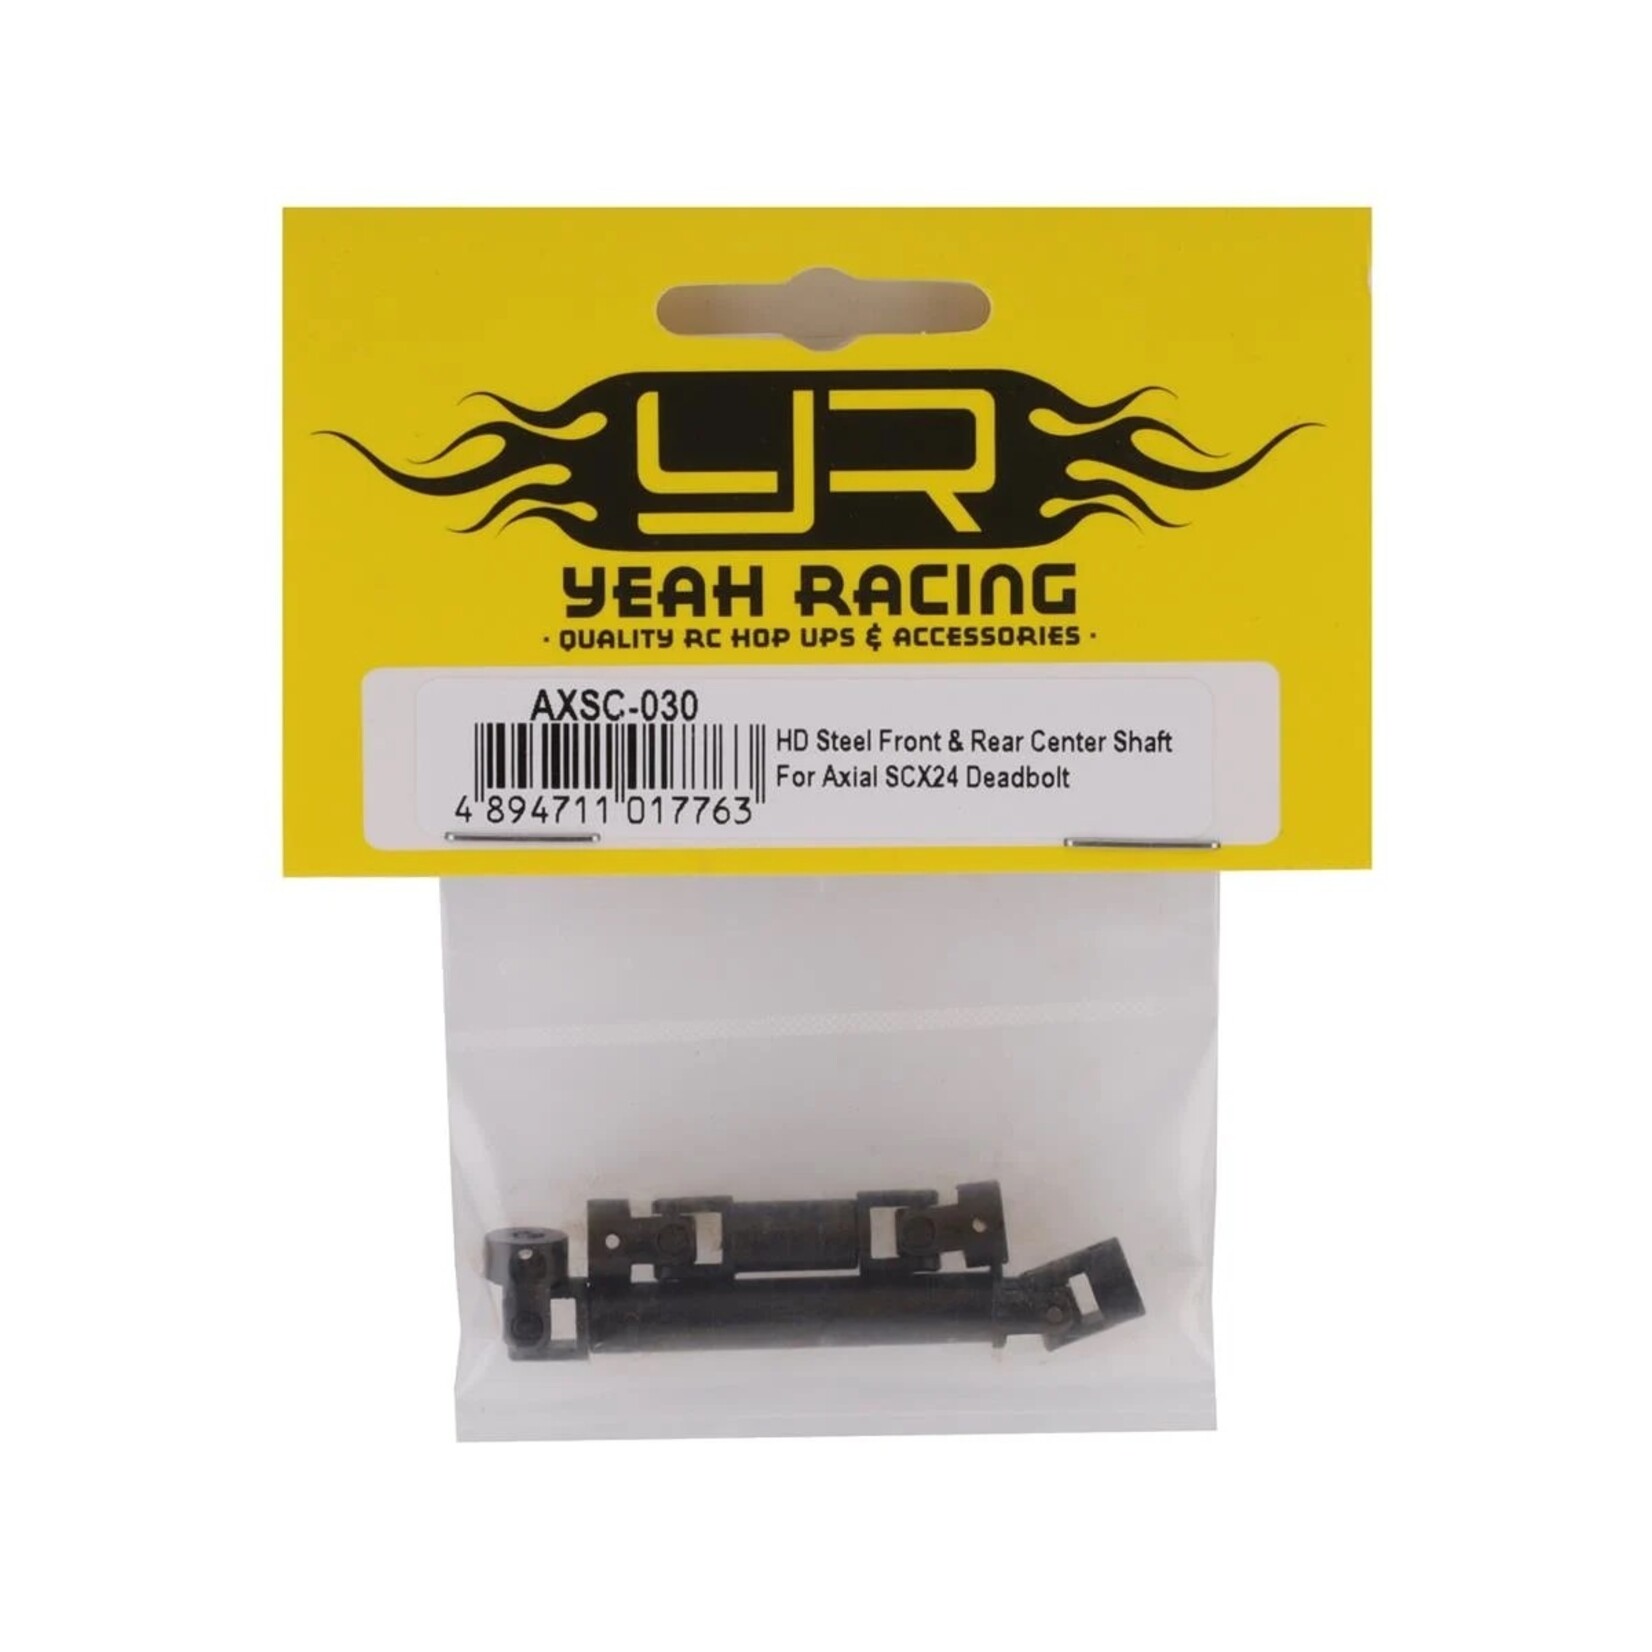 Yeah Racing Yeah Racing SCX24 Deadbolt Steel Center Driveshafts #AXSC-030